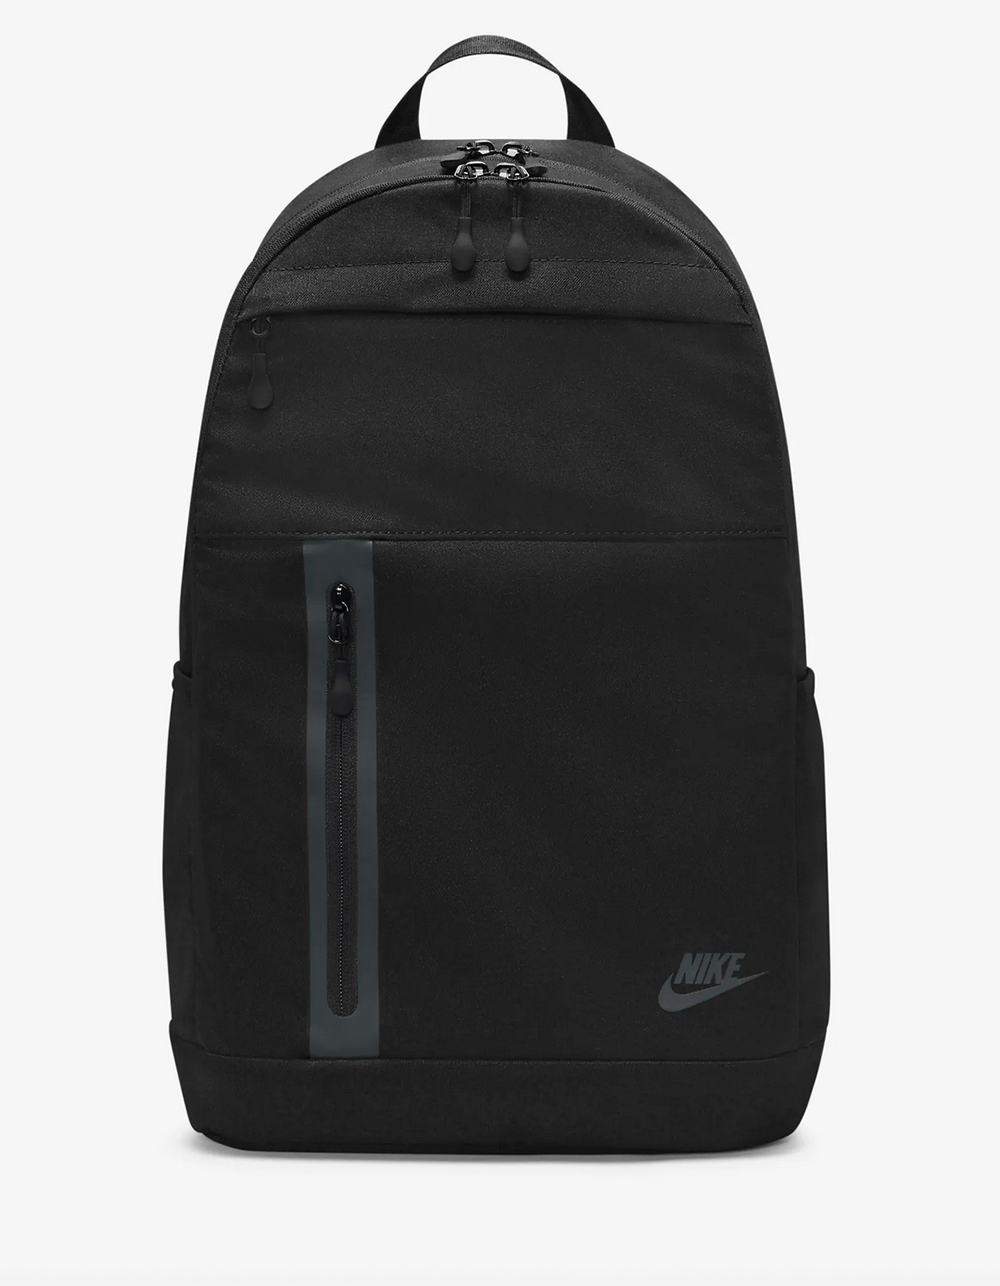 NIKE Elemental Premium Backpack - BLACK | Tillys